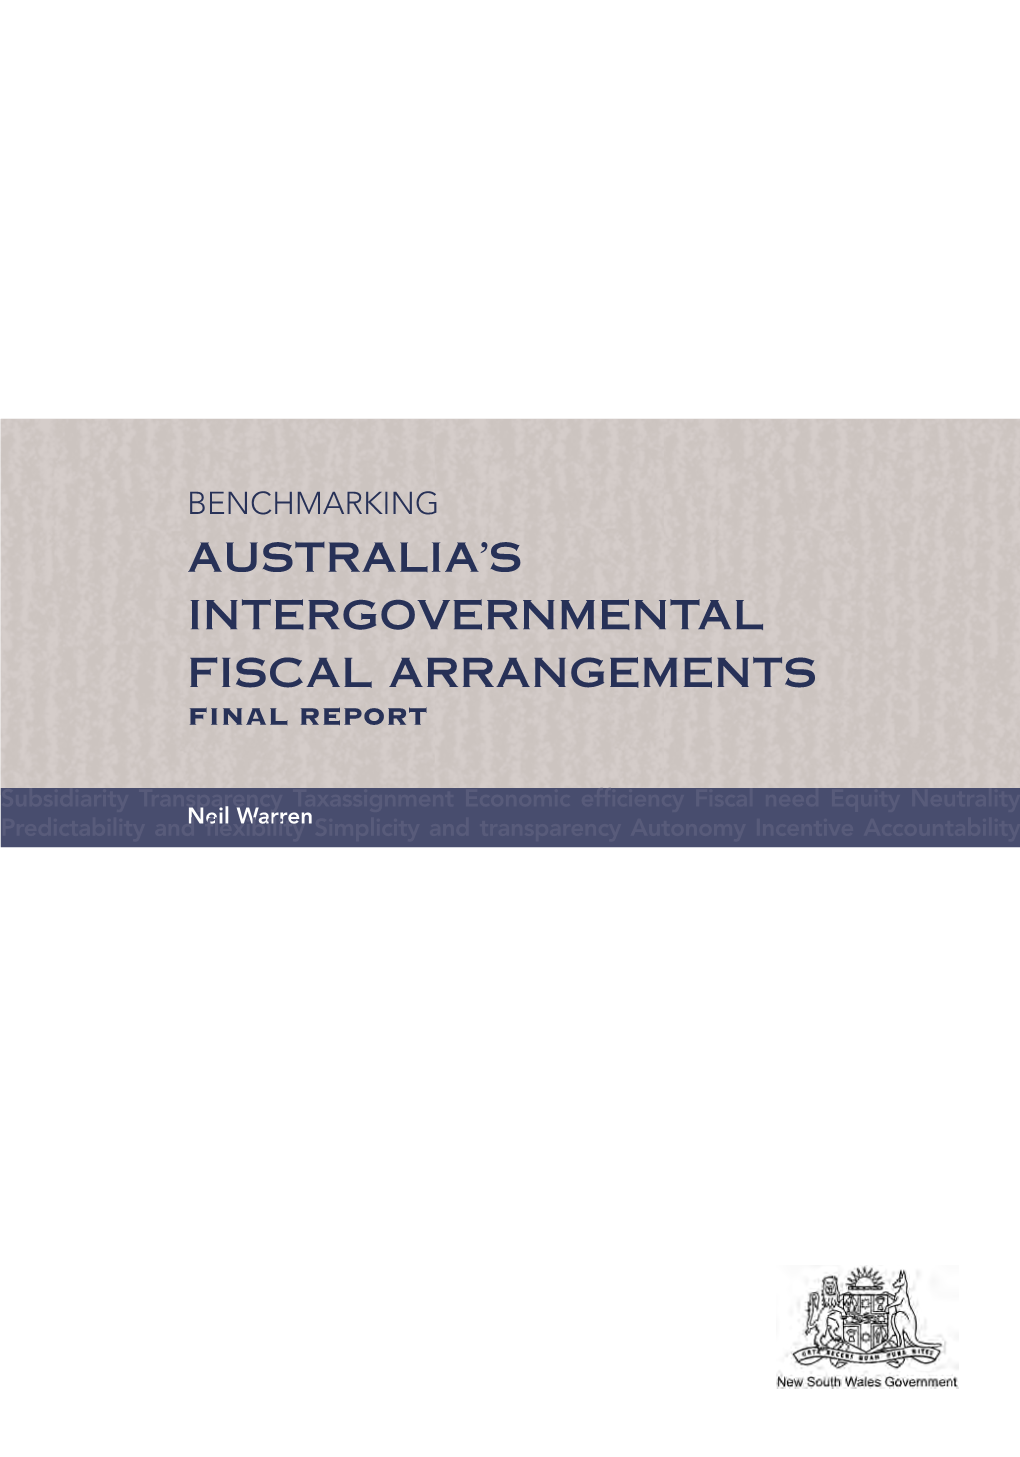 Australia's Intergovernmental Fiscal Arrangements Final Report